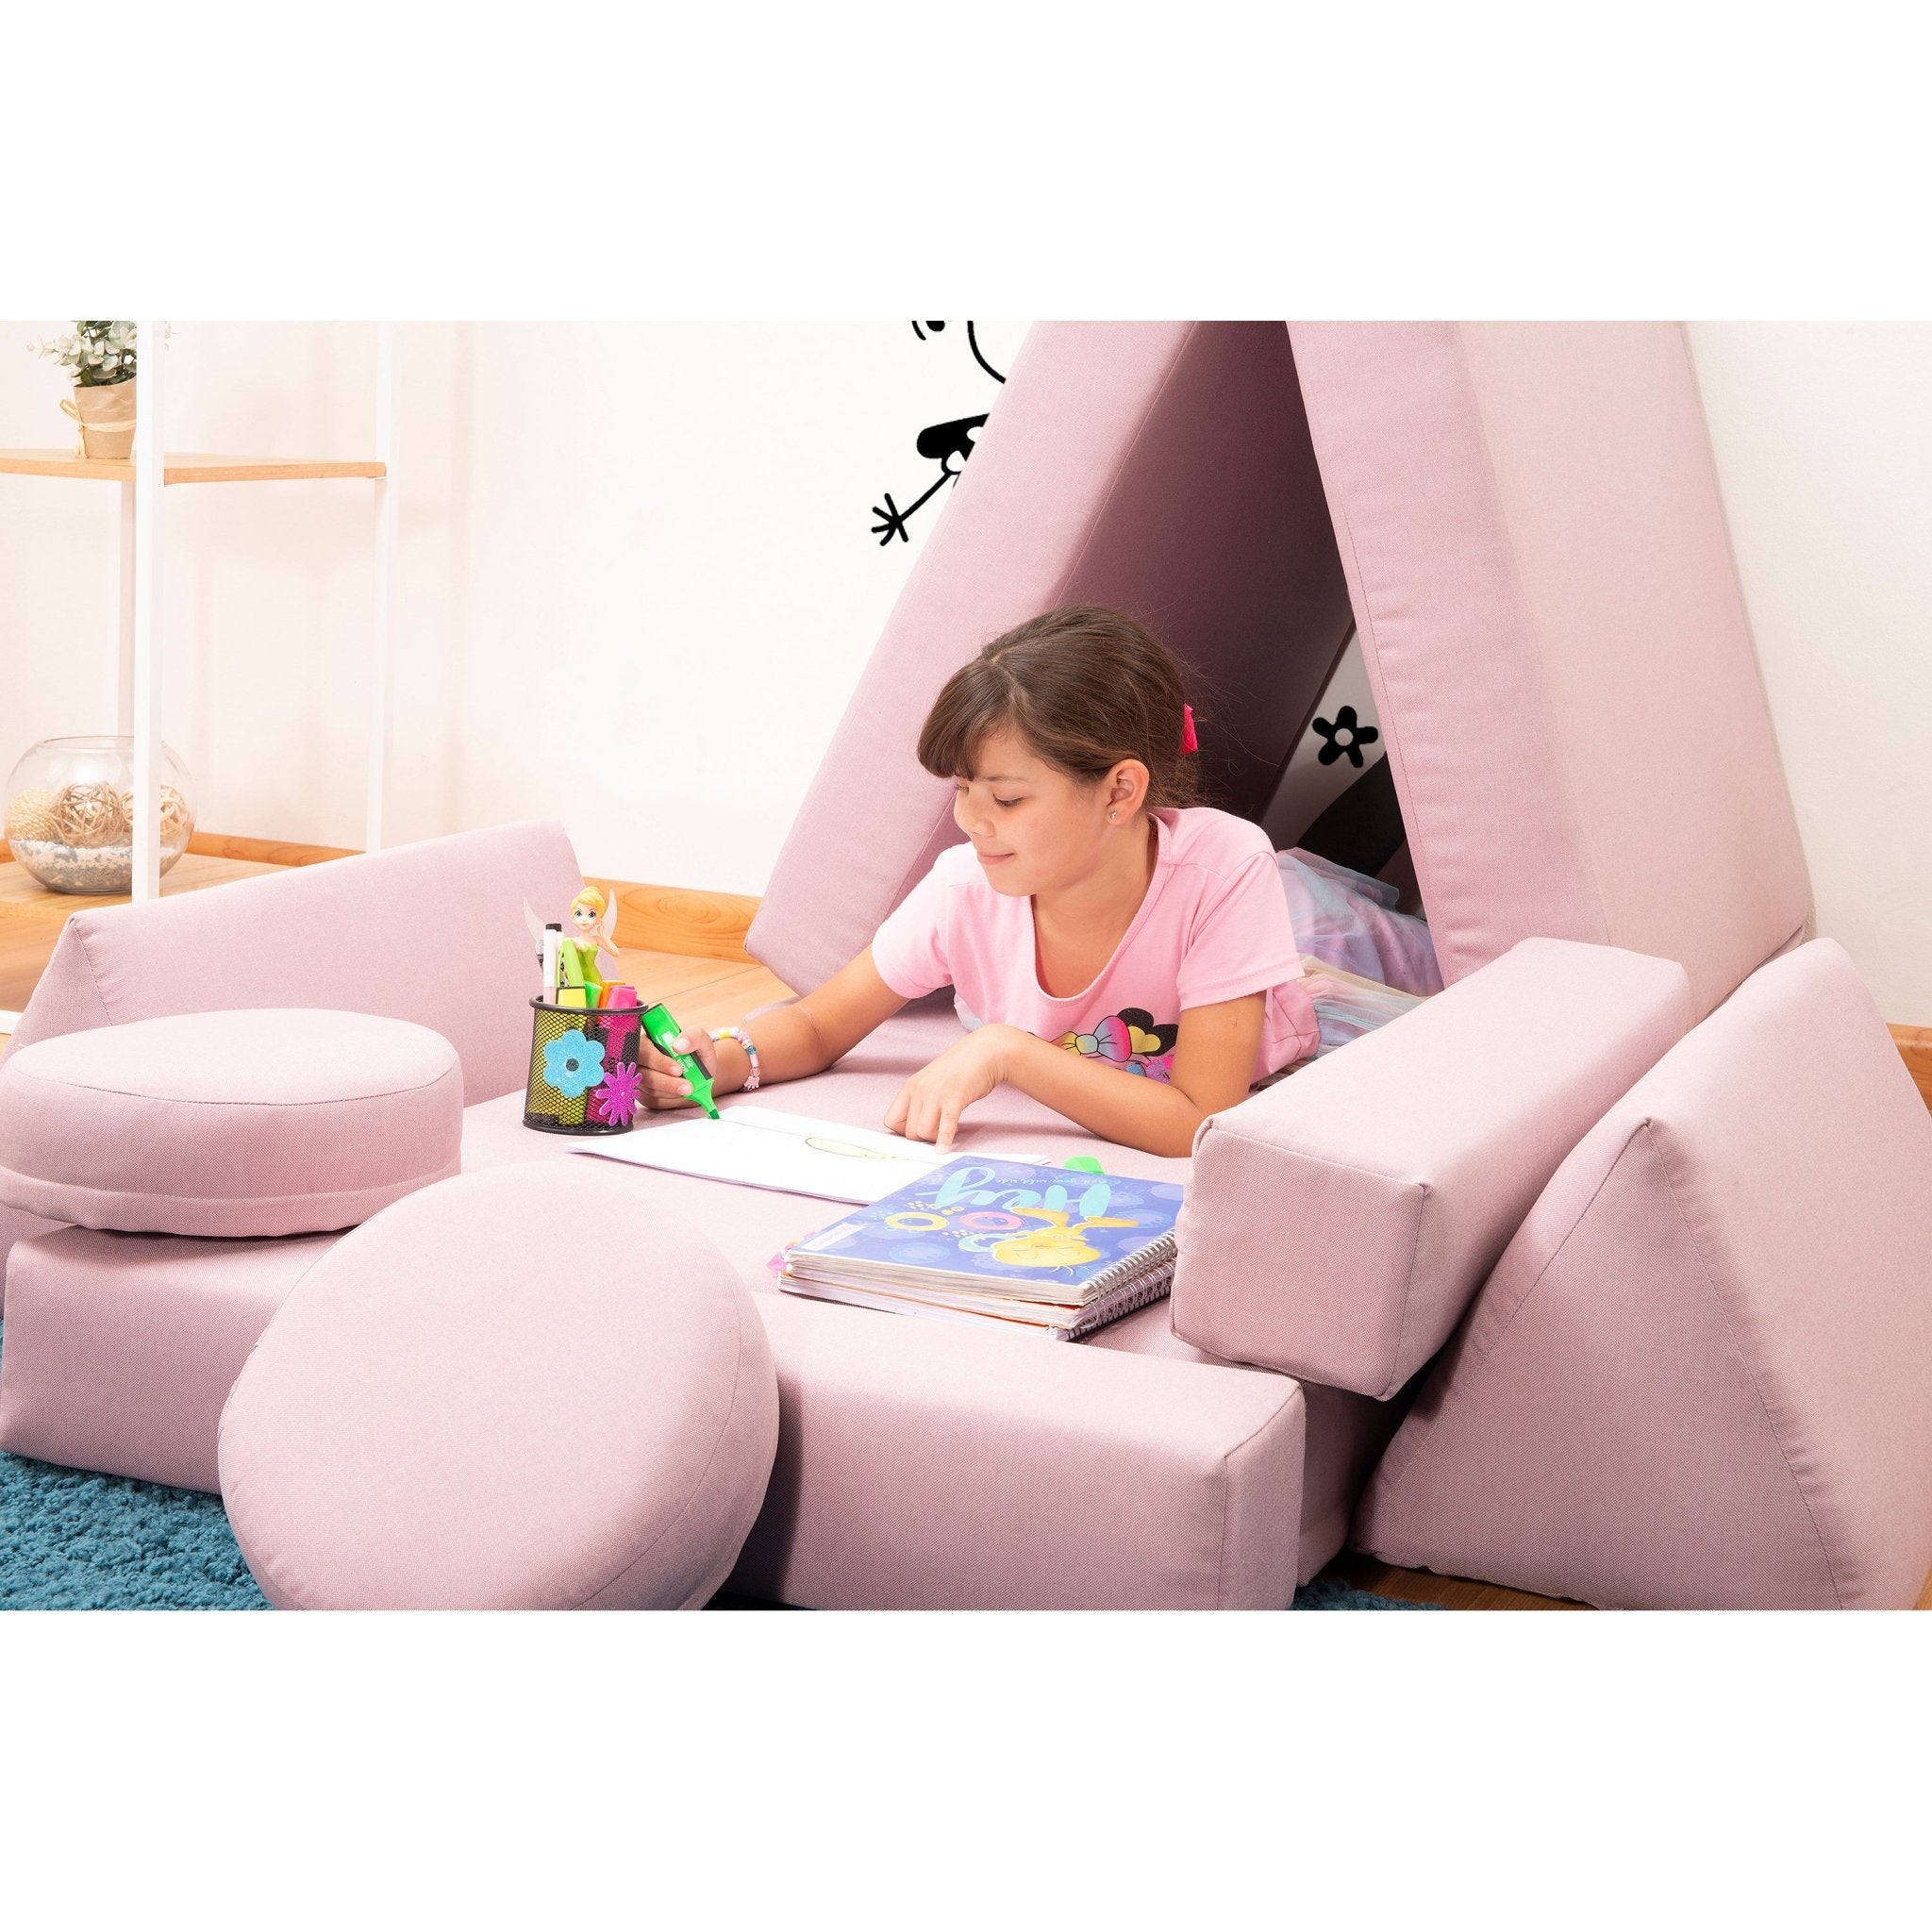 Bloques Lego Kids - Sofa